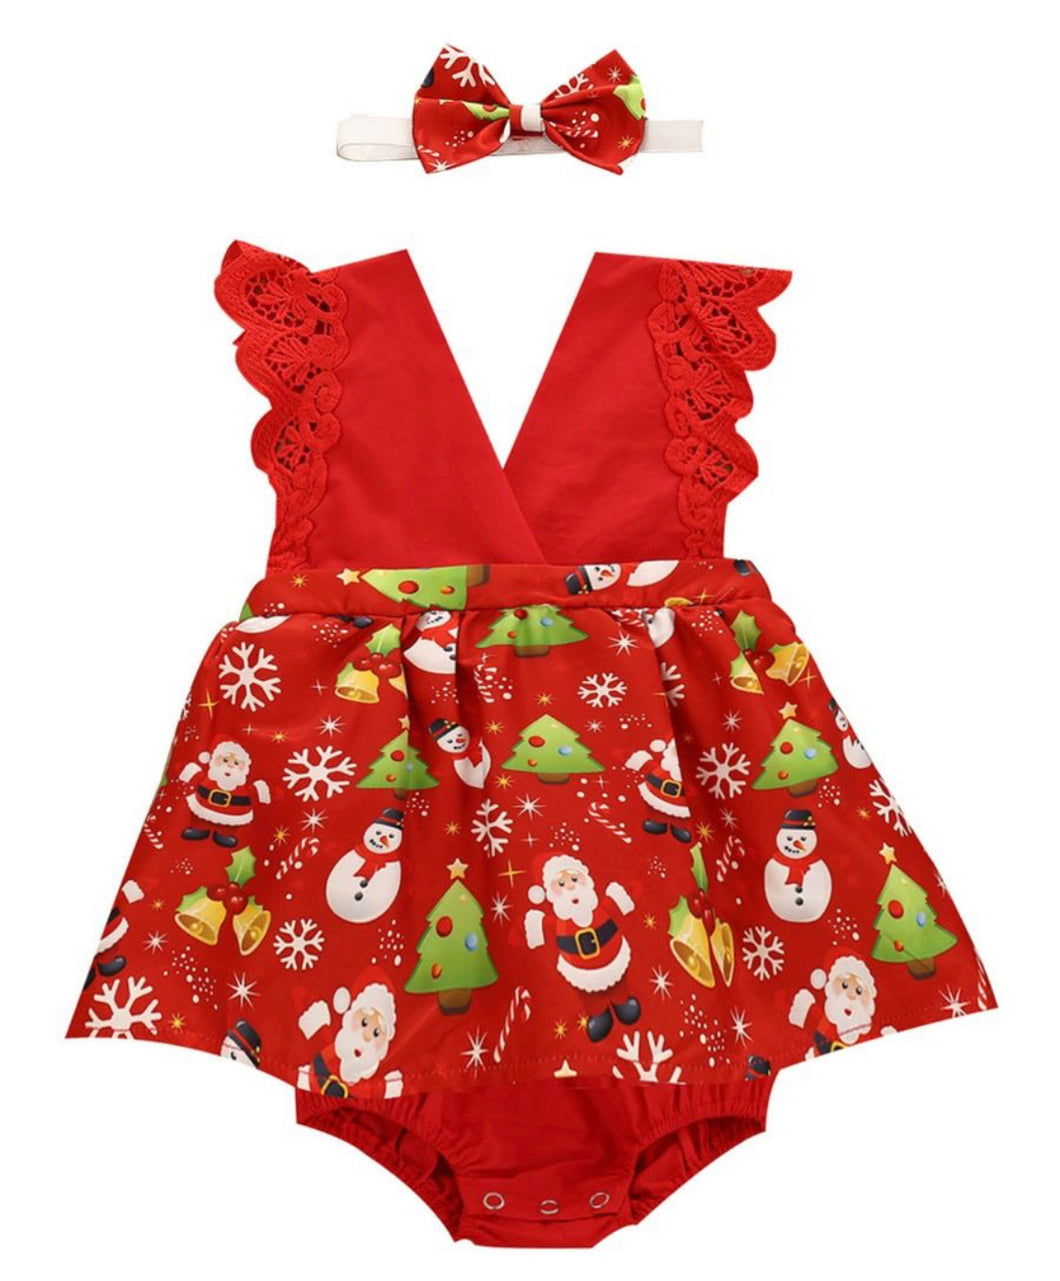 Baby girls Christmas romper - red